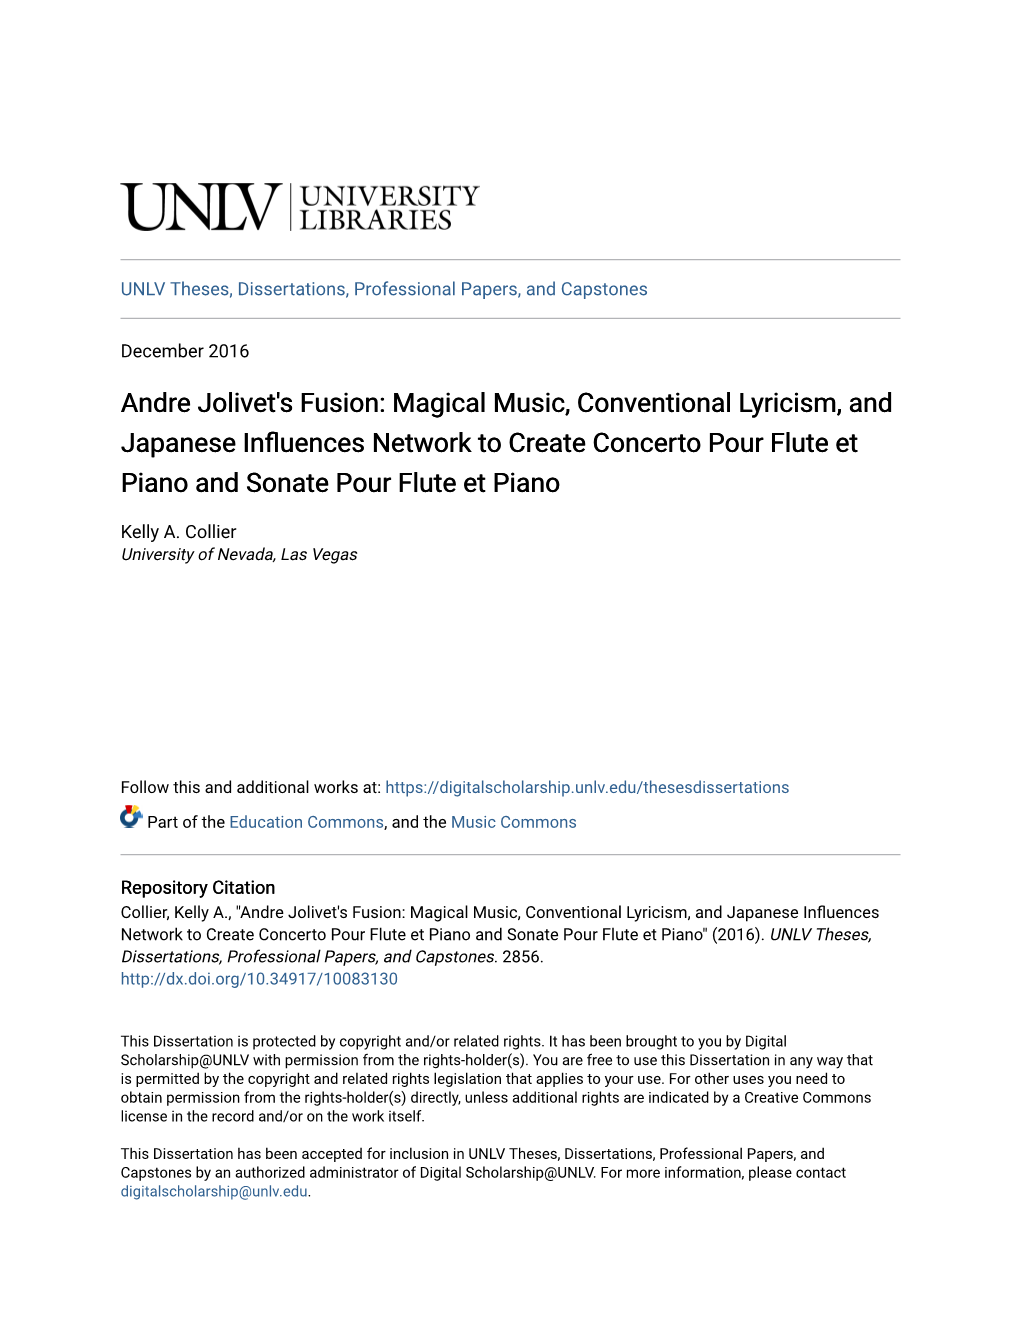 Andre Jolivet's Fusion: Magical Music, Conventional Lyricism, and Japanese Influences Network Ot Create Concerto Pour Flute Et Piano and Sonate Pour Flute Et Piano